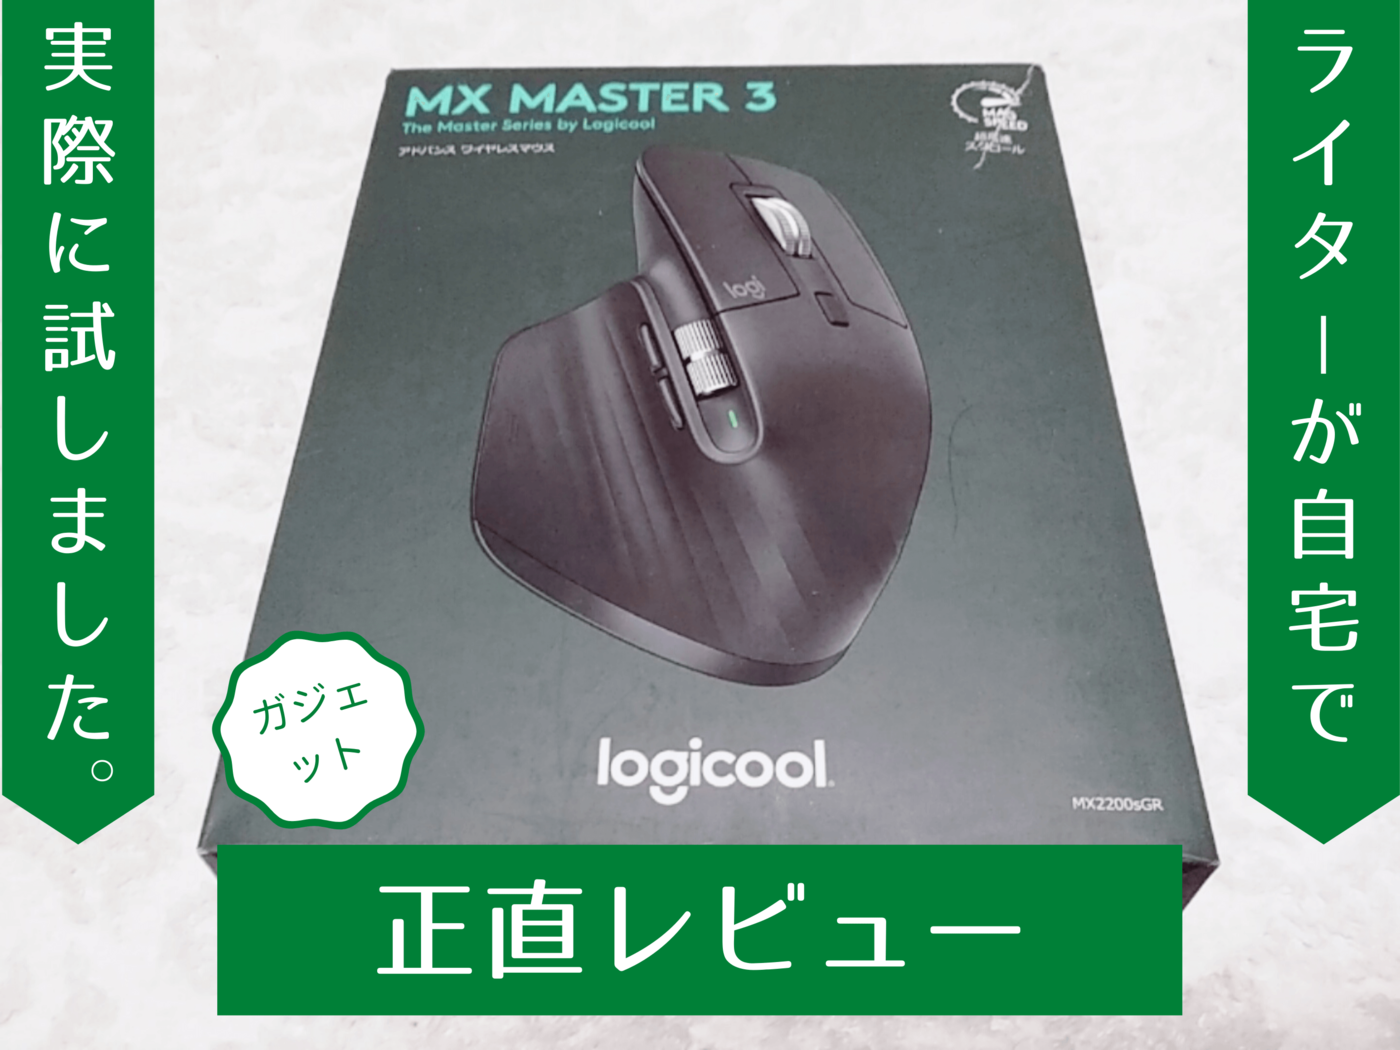 Logicool MX Master